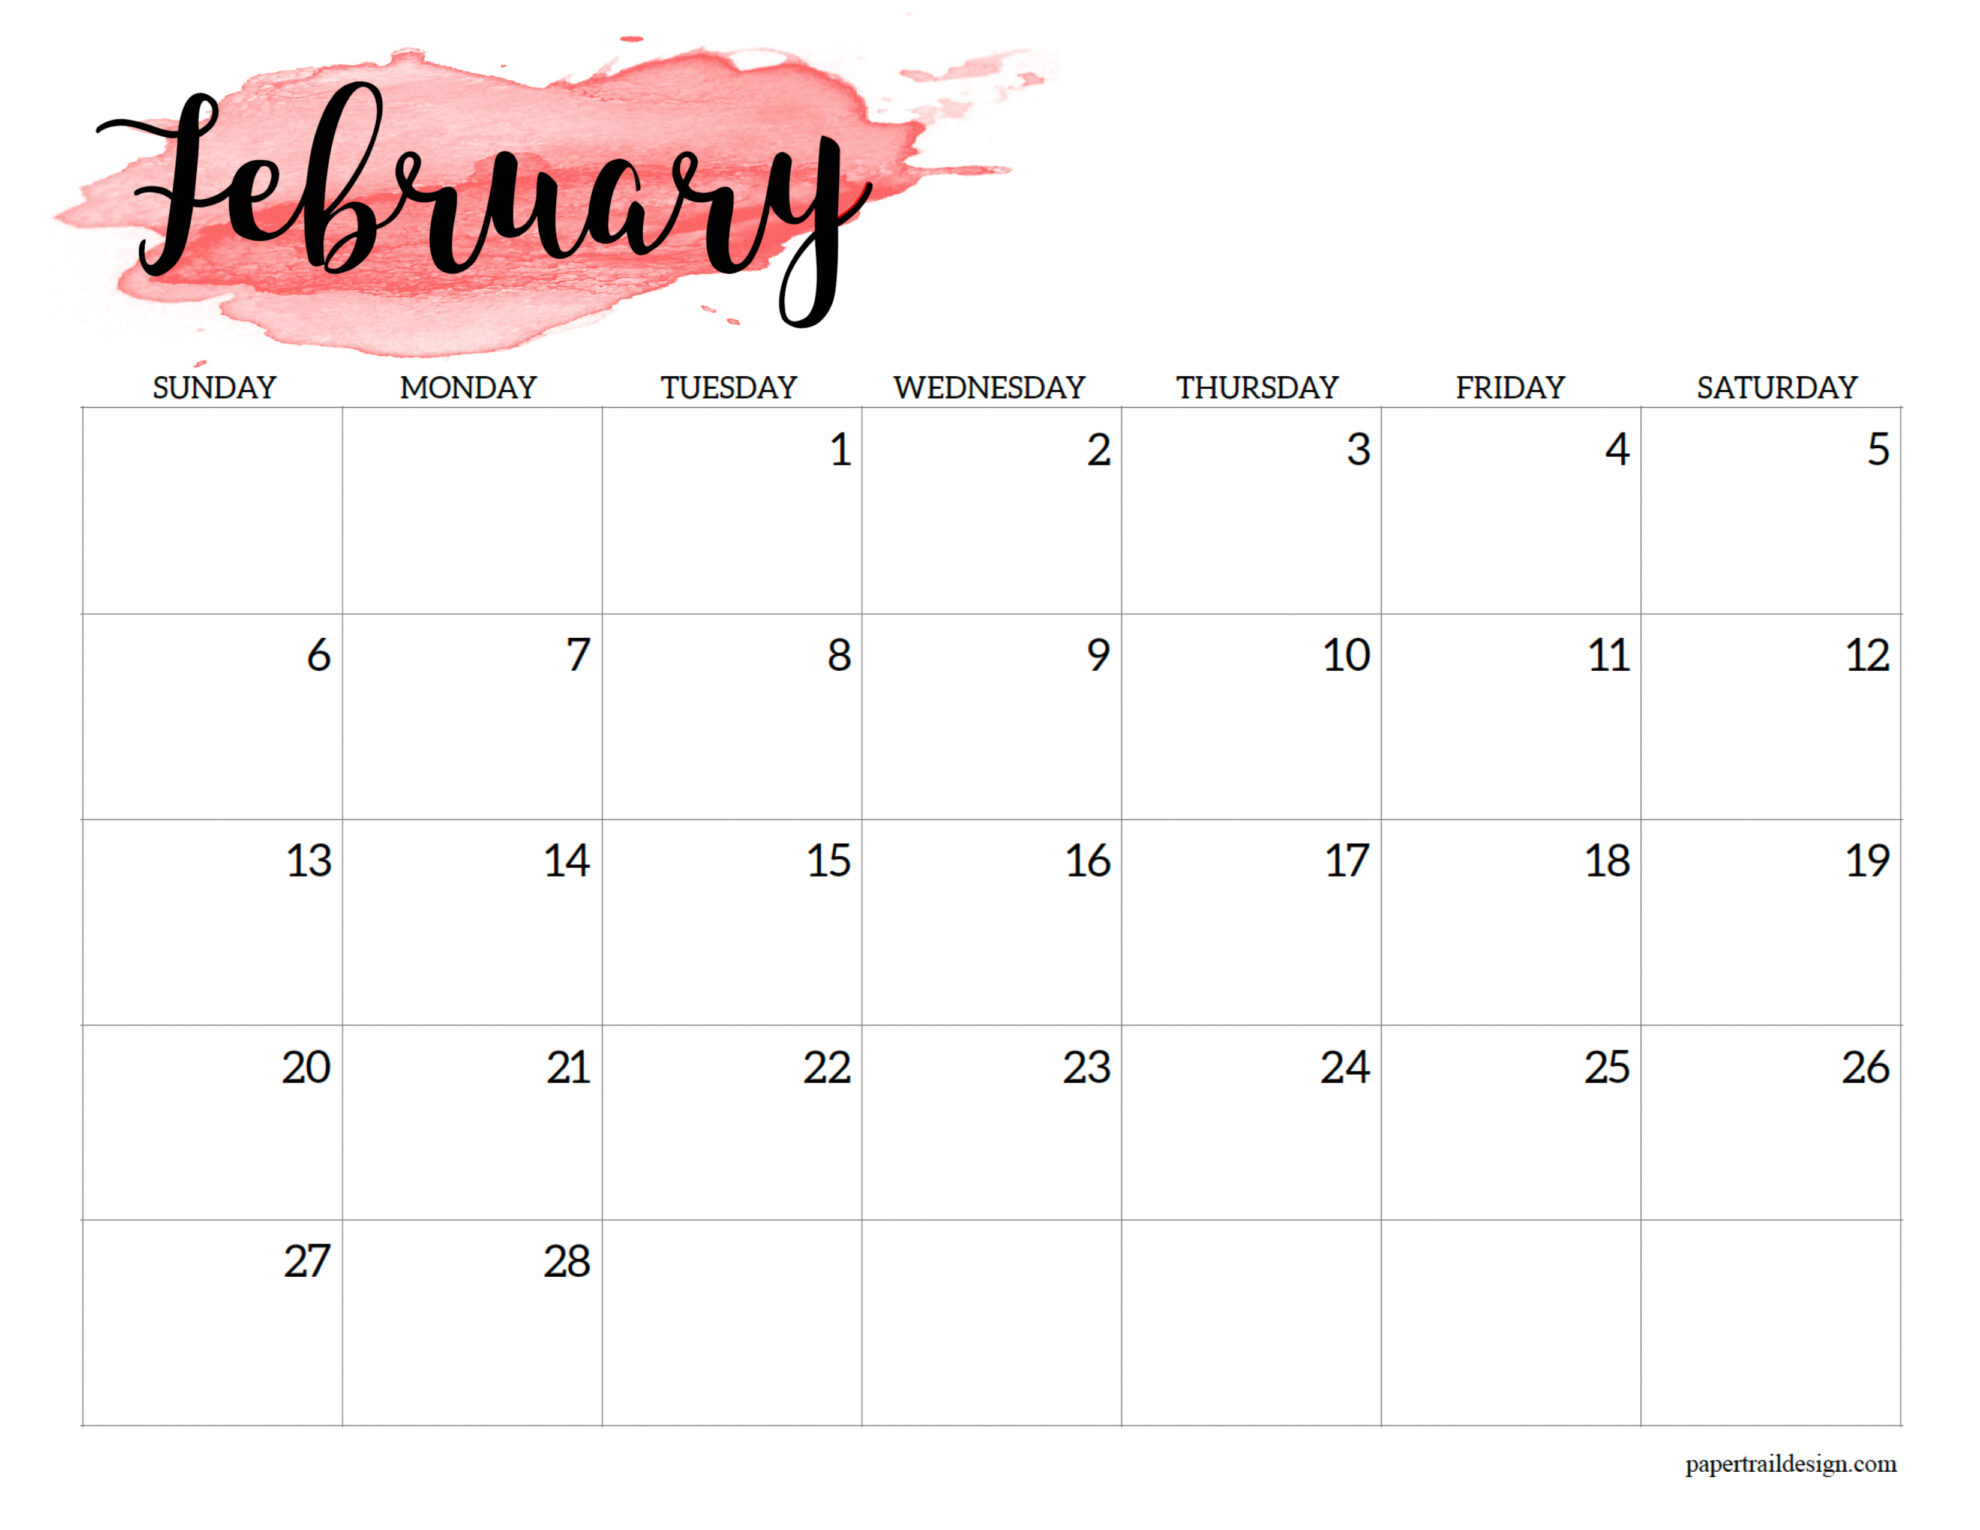 Print A Calendar February 2022 2022 Calendar Printable - Watercolor - Paper Trail Design